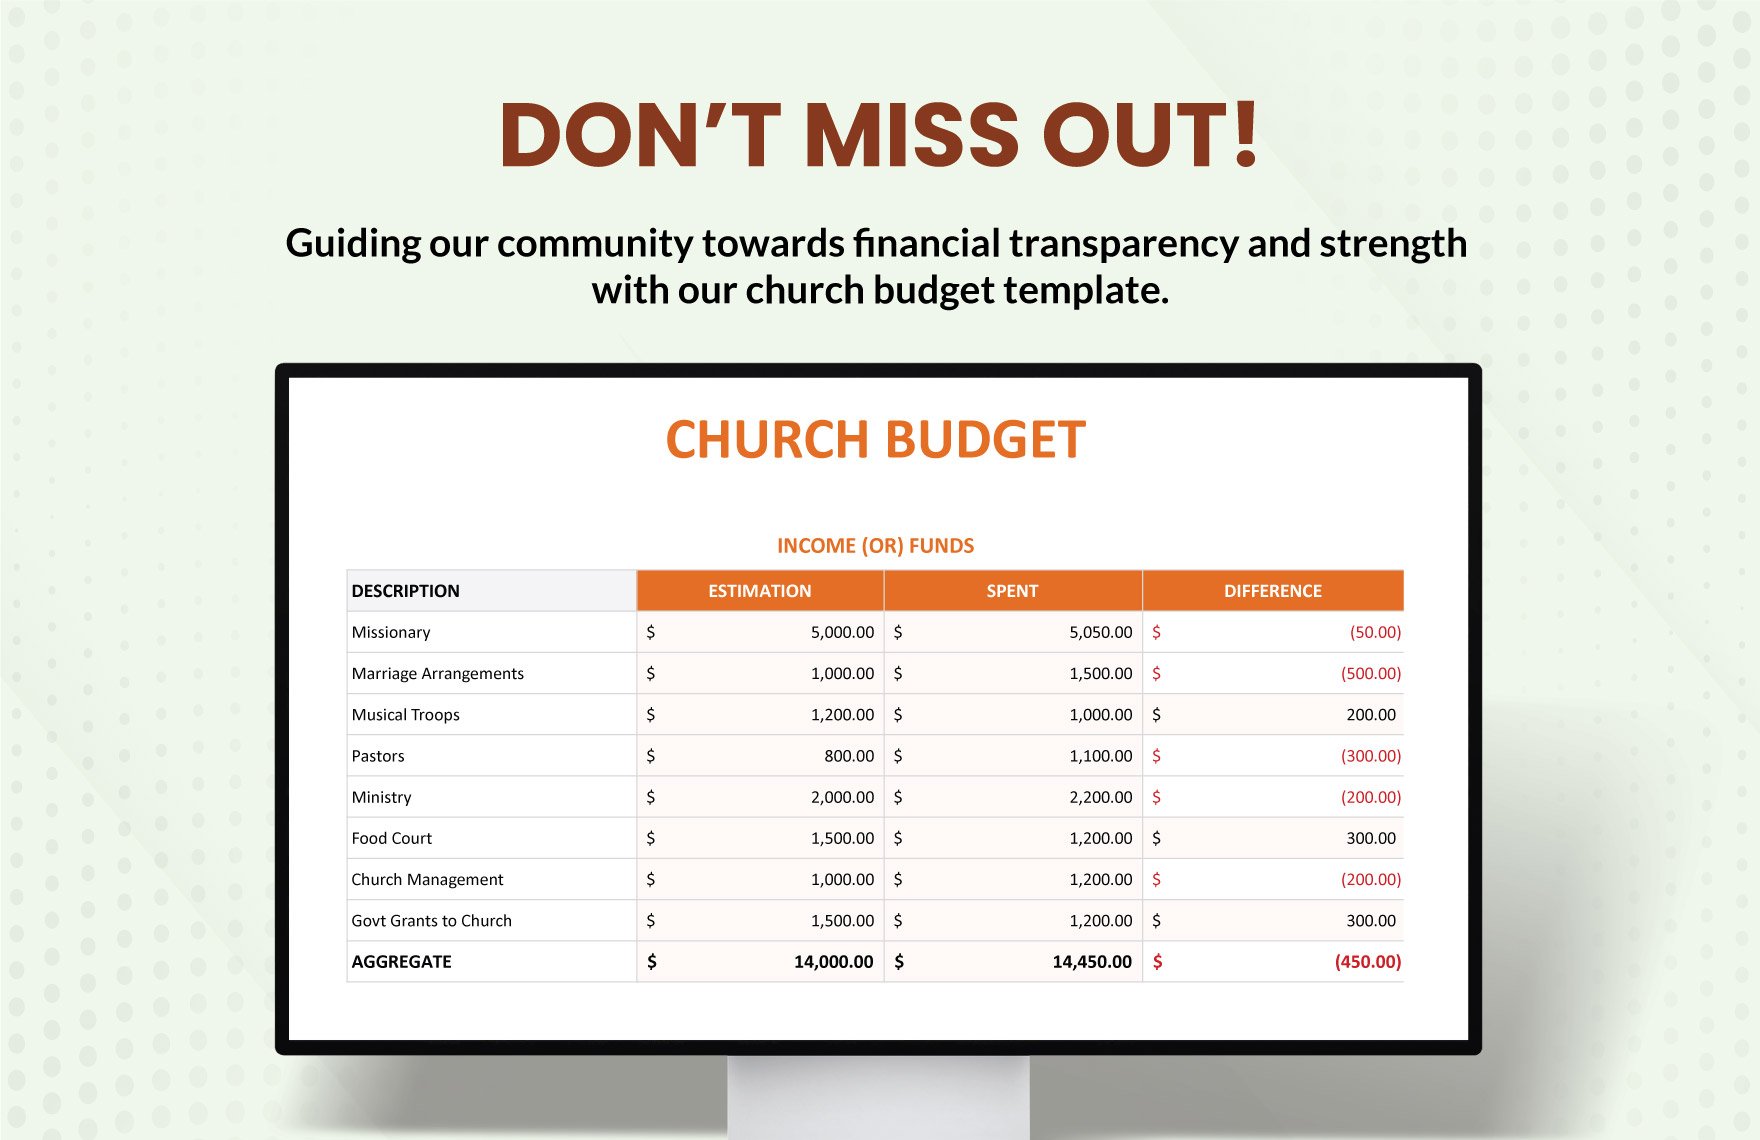 Simple Church Budget Template